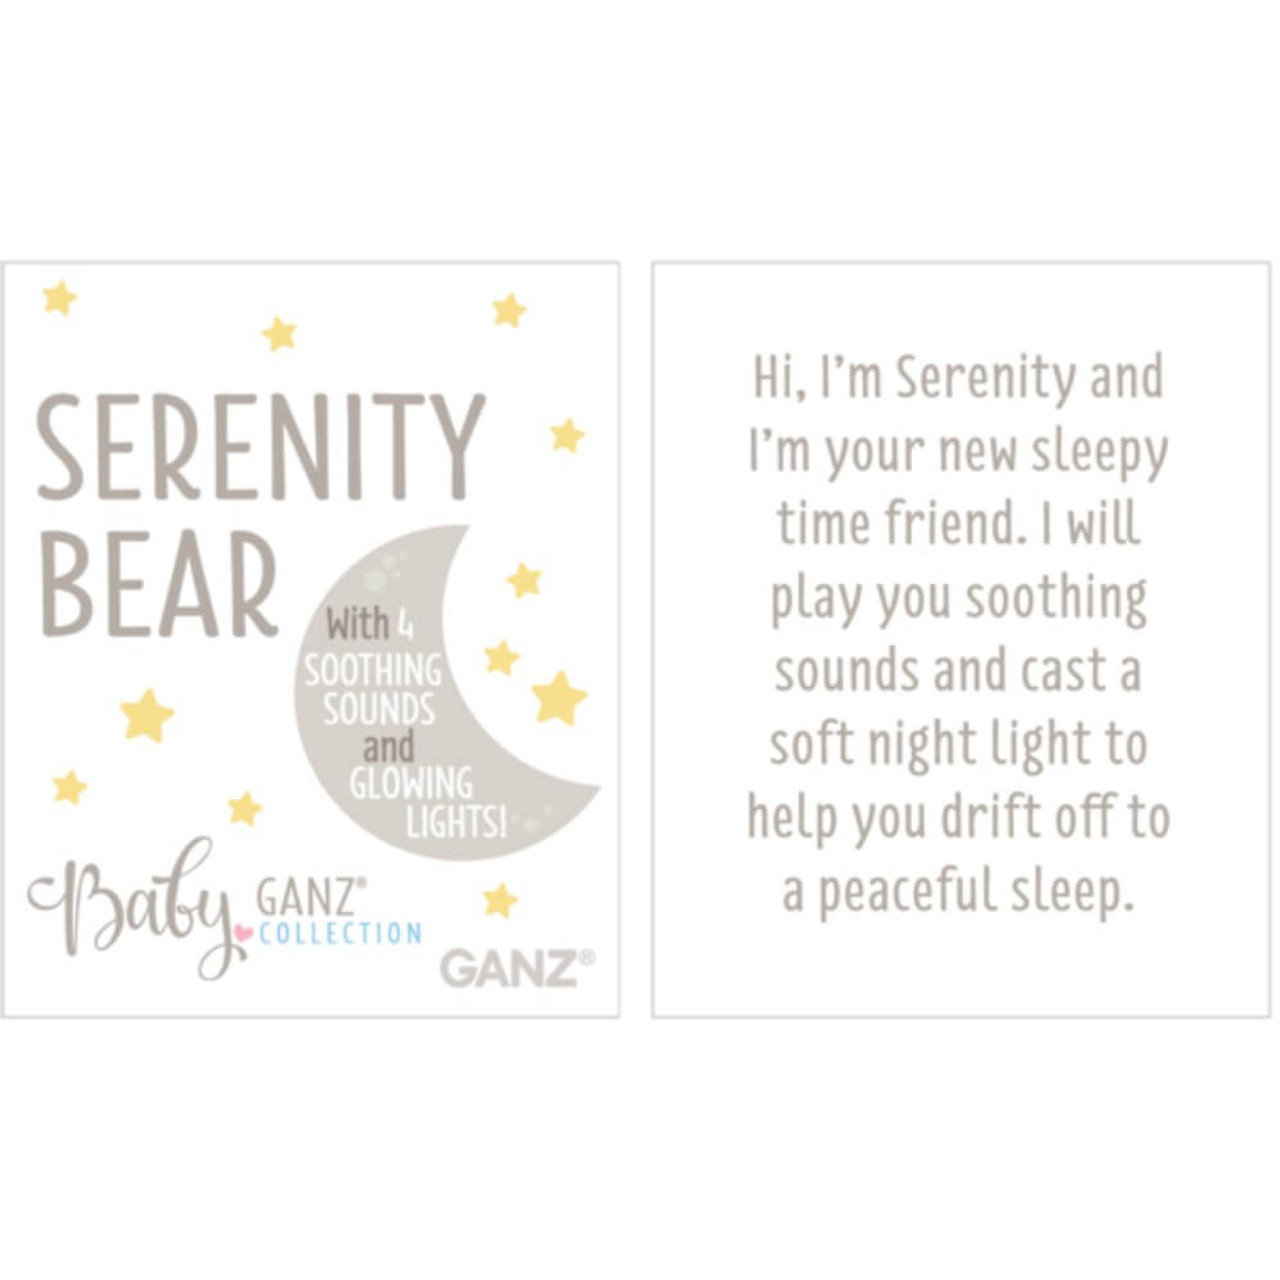 Ganz Serenity Bear